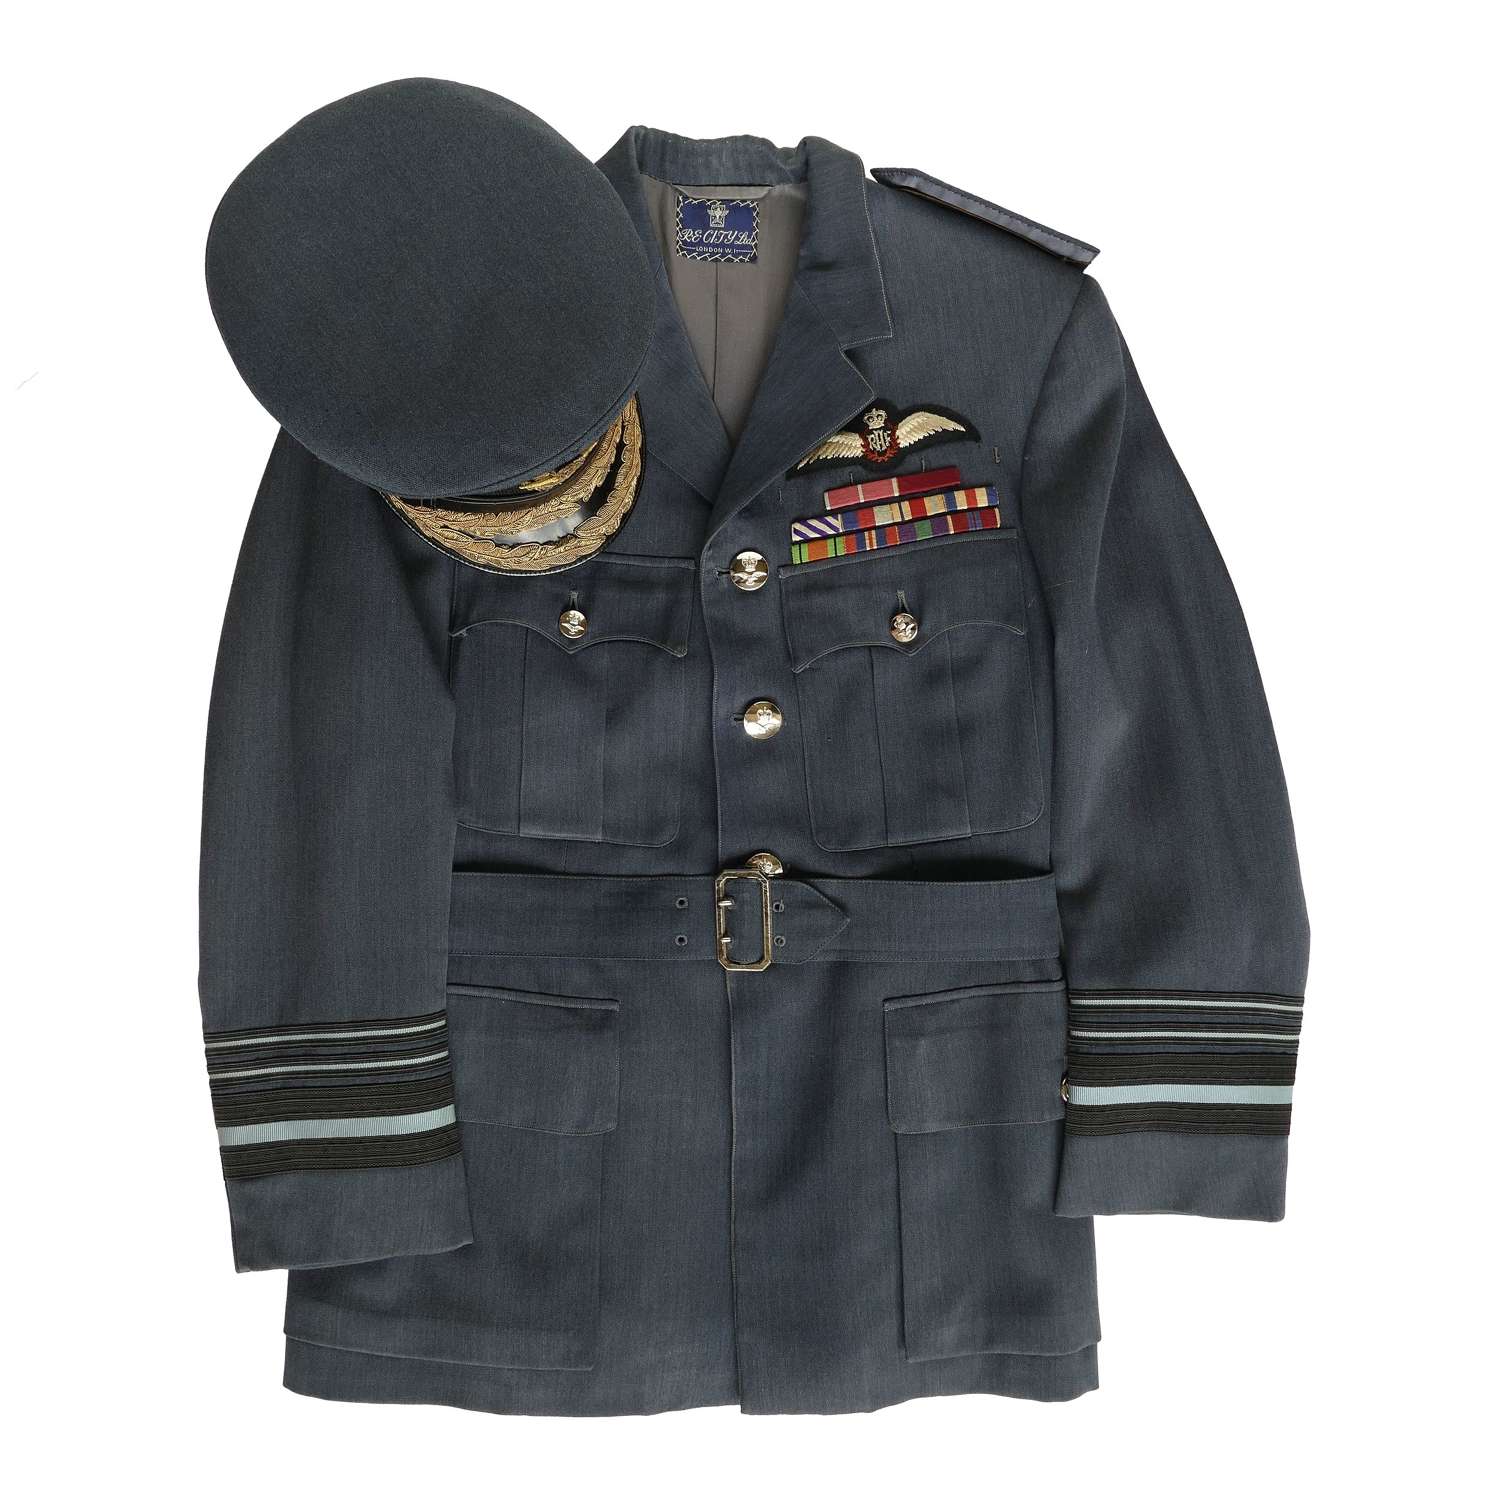 RAF uniform to Air Marshal Sir Patrick Hunter Dunn KBE, CB, DFC